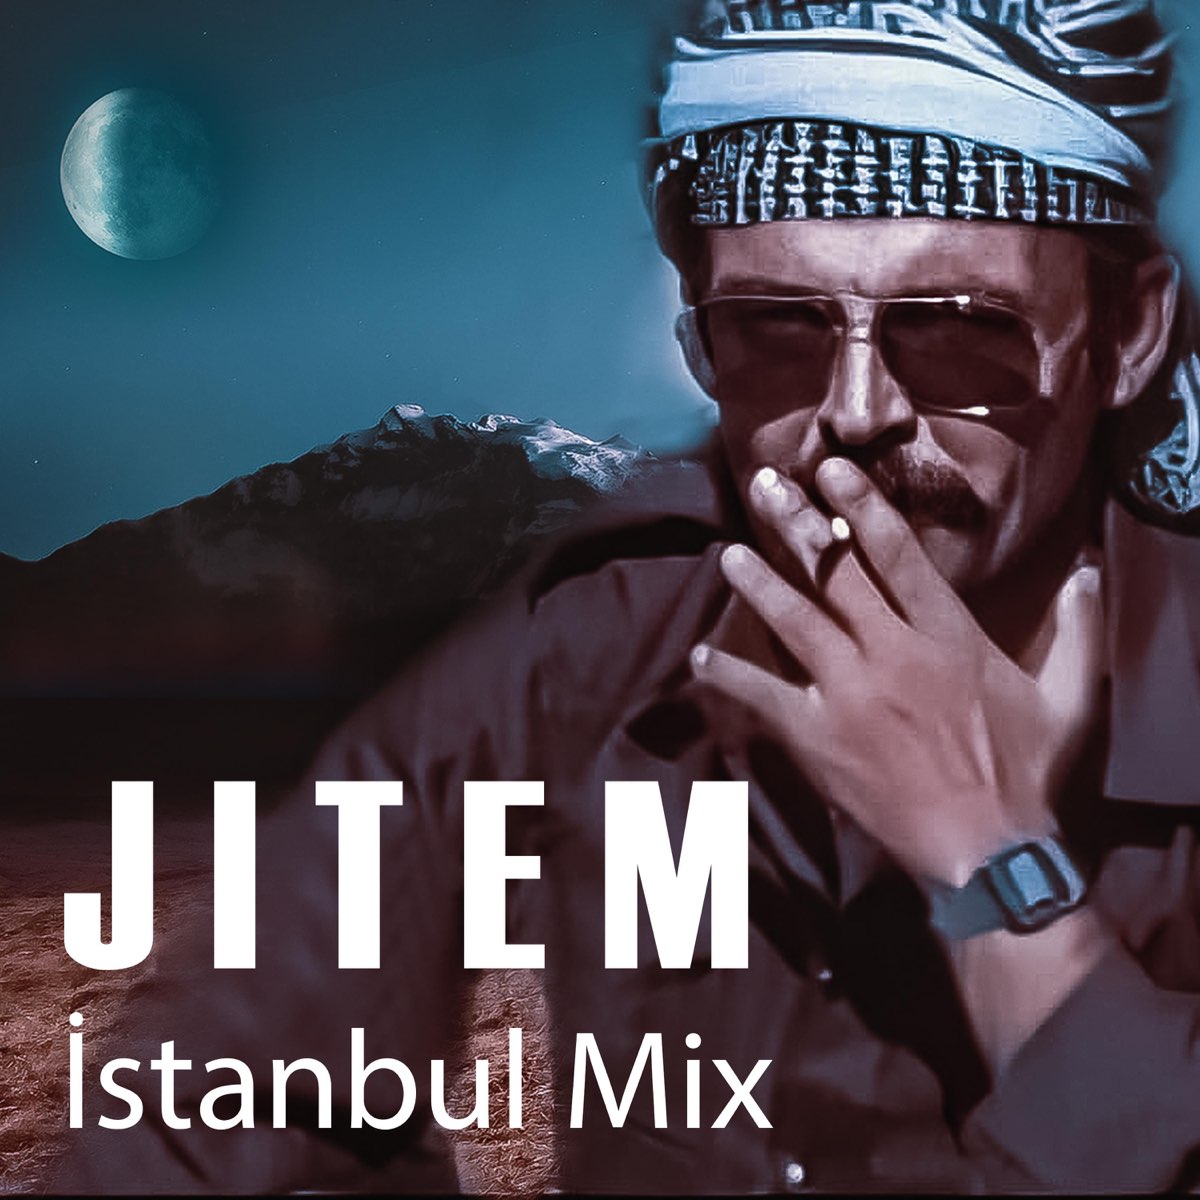 JITEM (feat. Cem Mix] [İstanbul Mix] - Single by haskin on